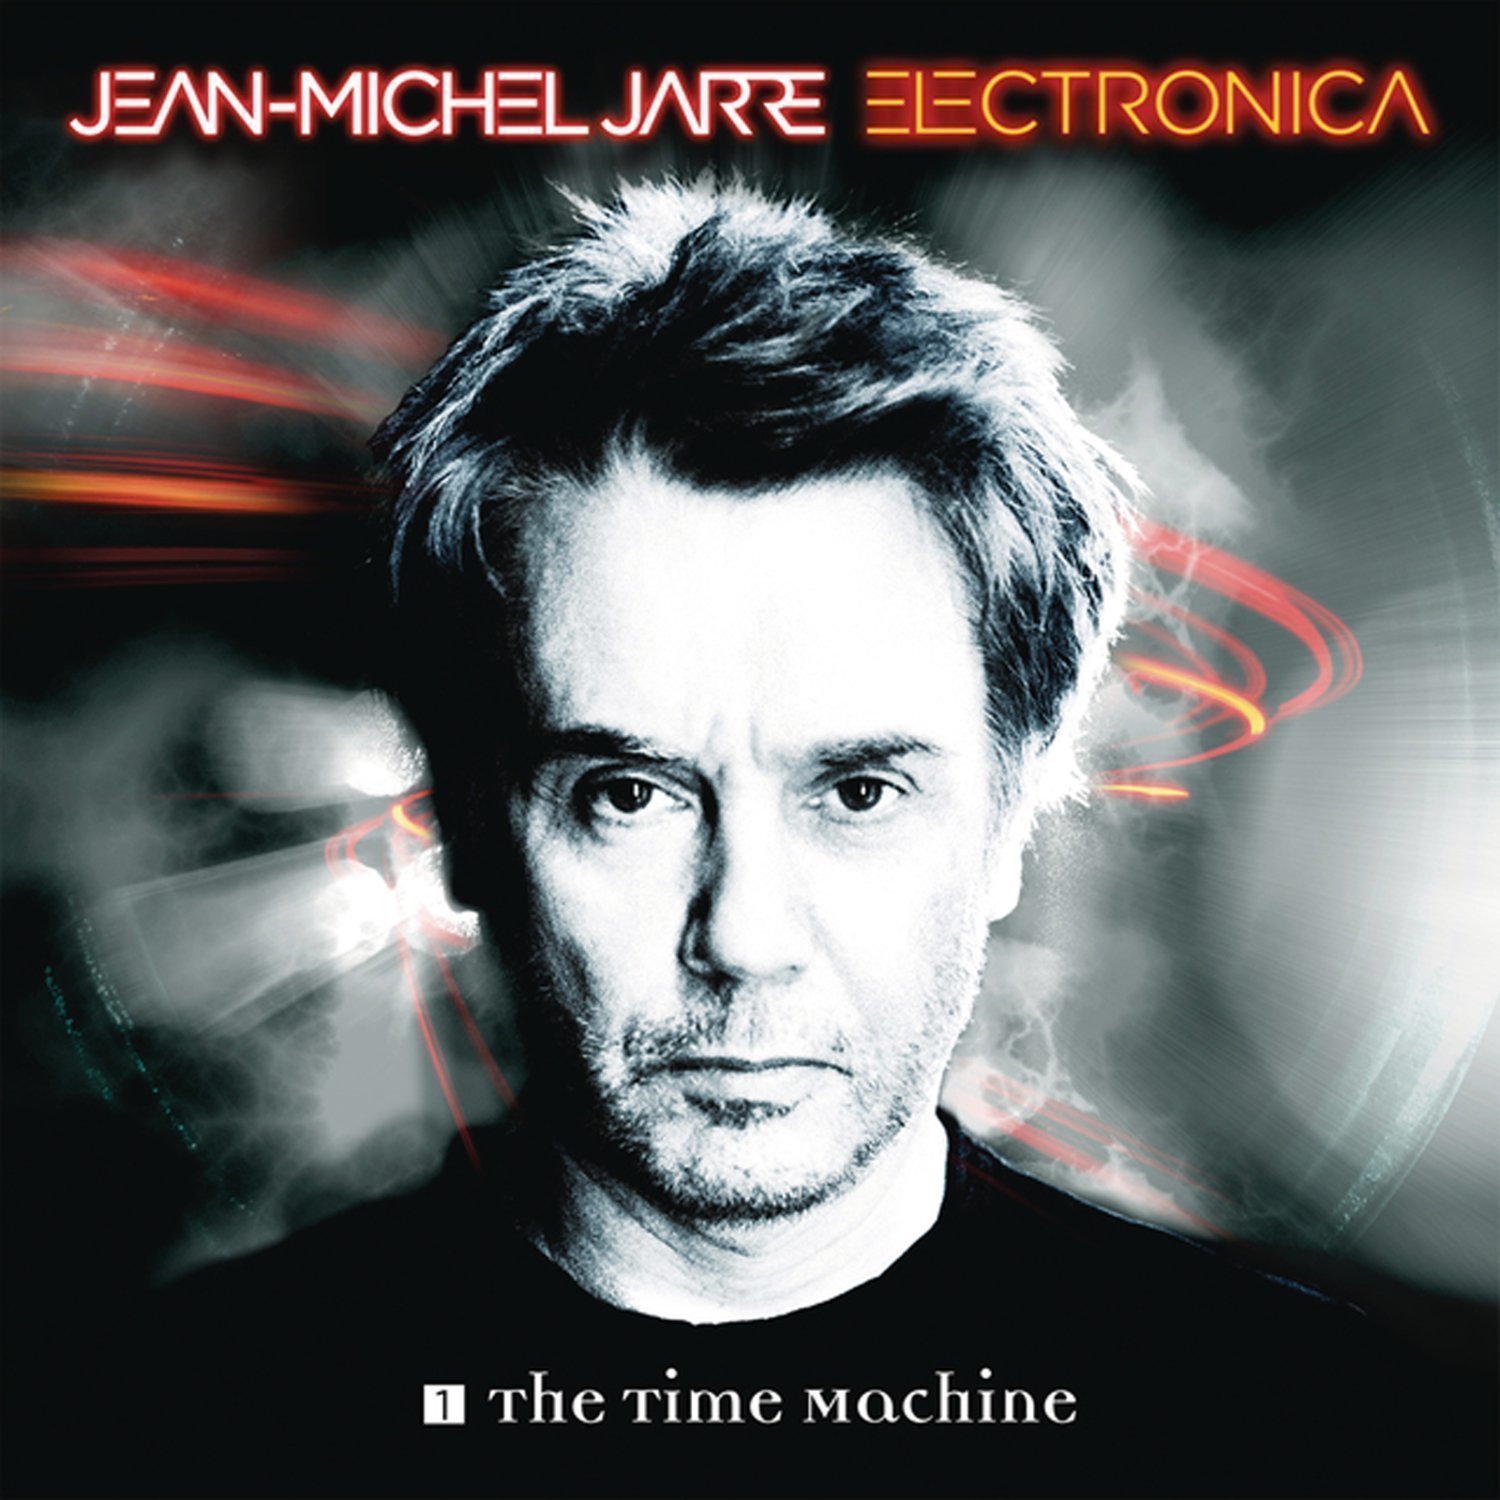 LP Jean-Michel Jarre Electronica 1: The Time Machine (2 LP)